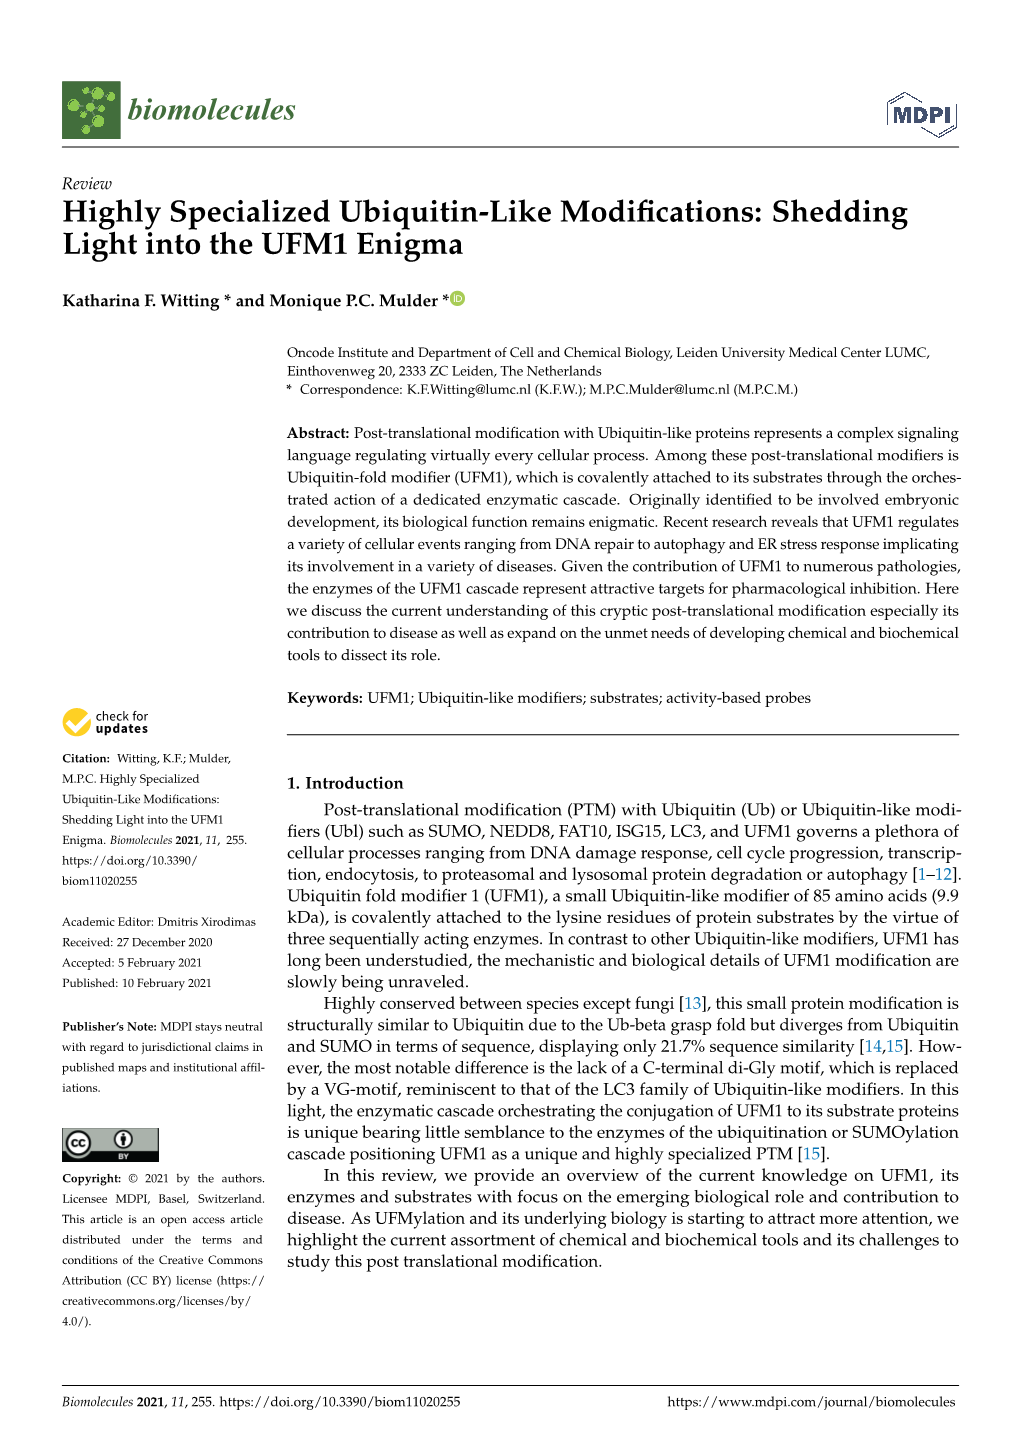 Highly Specialized Ubiquitin-Like Modifications: Shedding Light Into